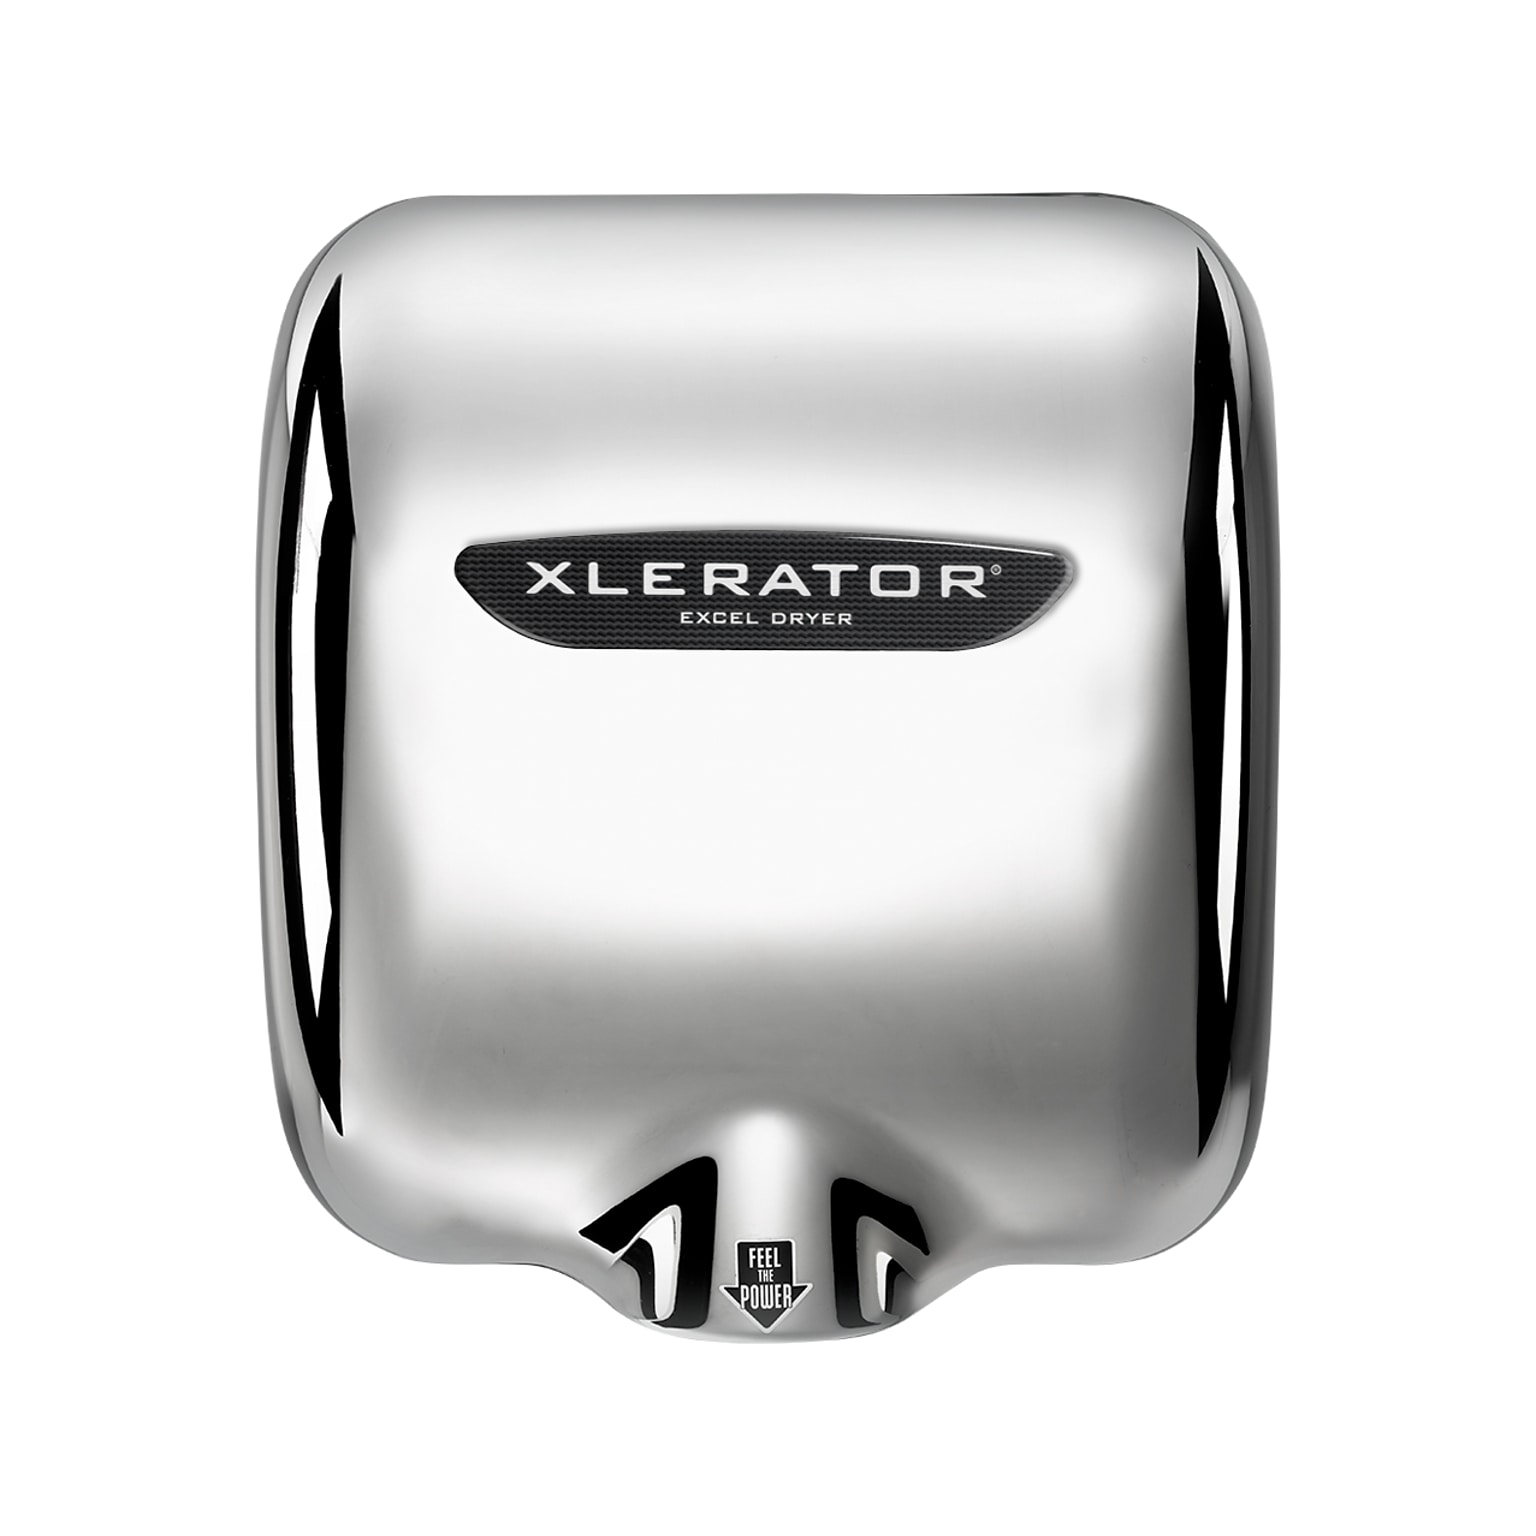 XLERATOR 208-277V Automatic Hand Dryer, Polished Chrome (601166AH)